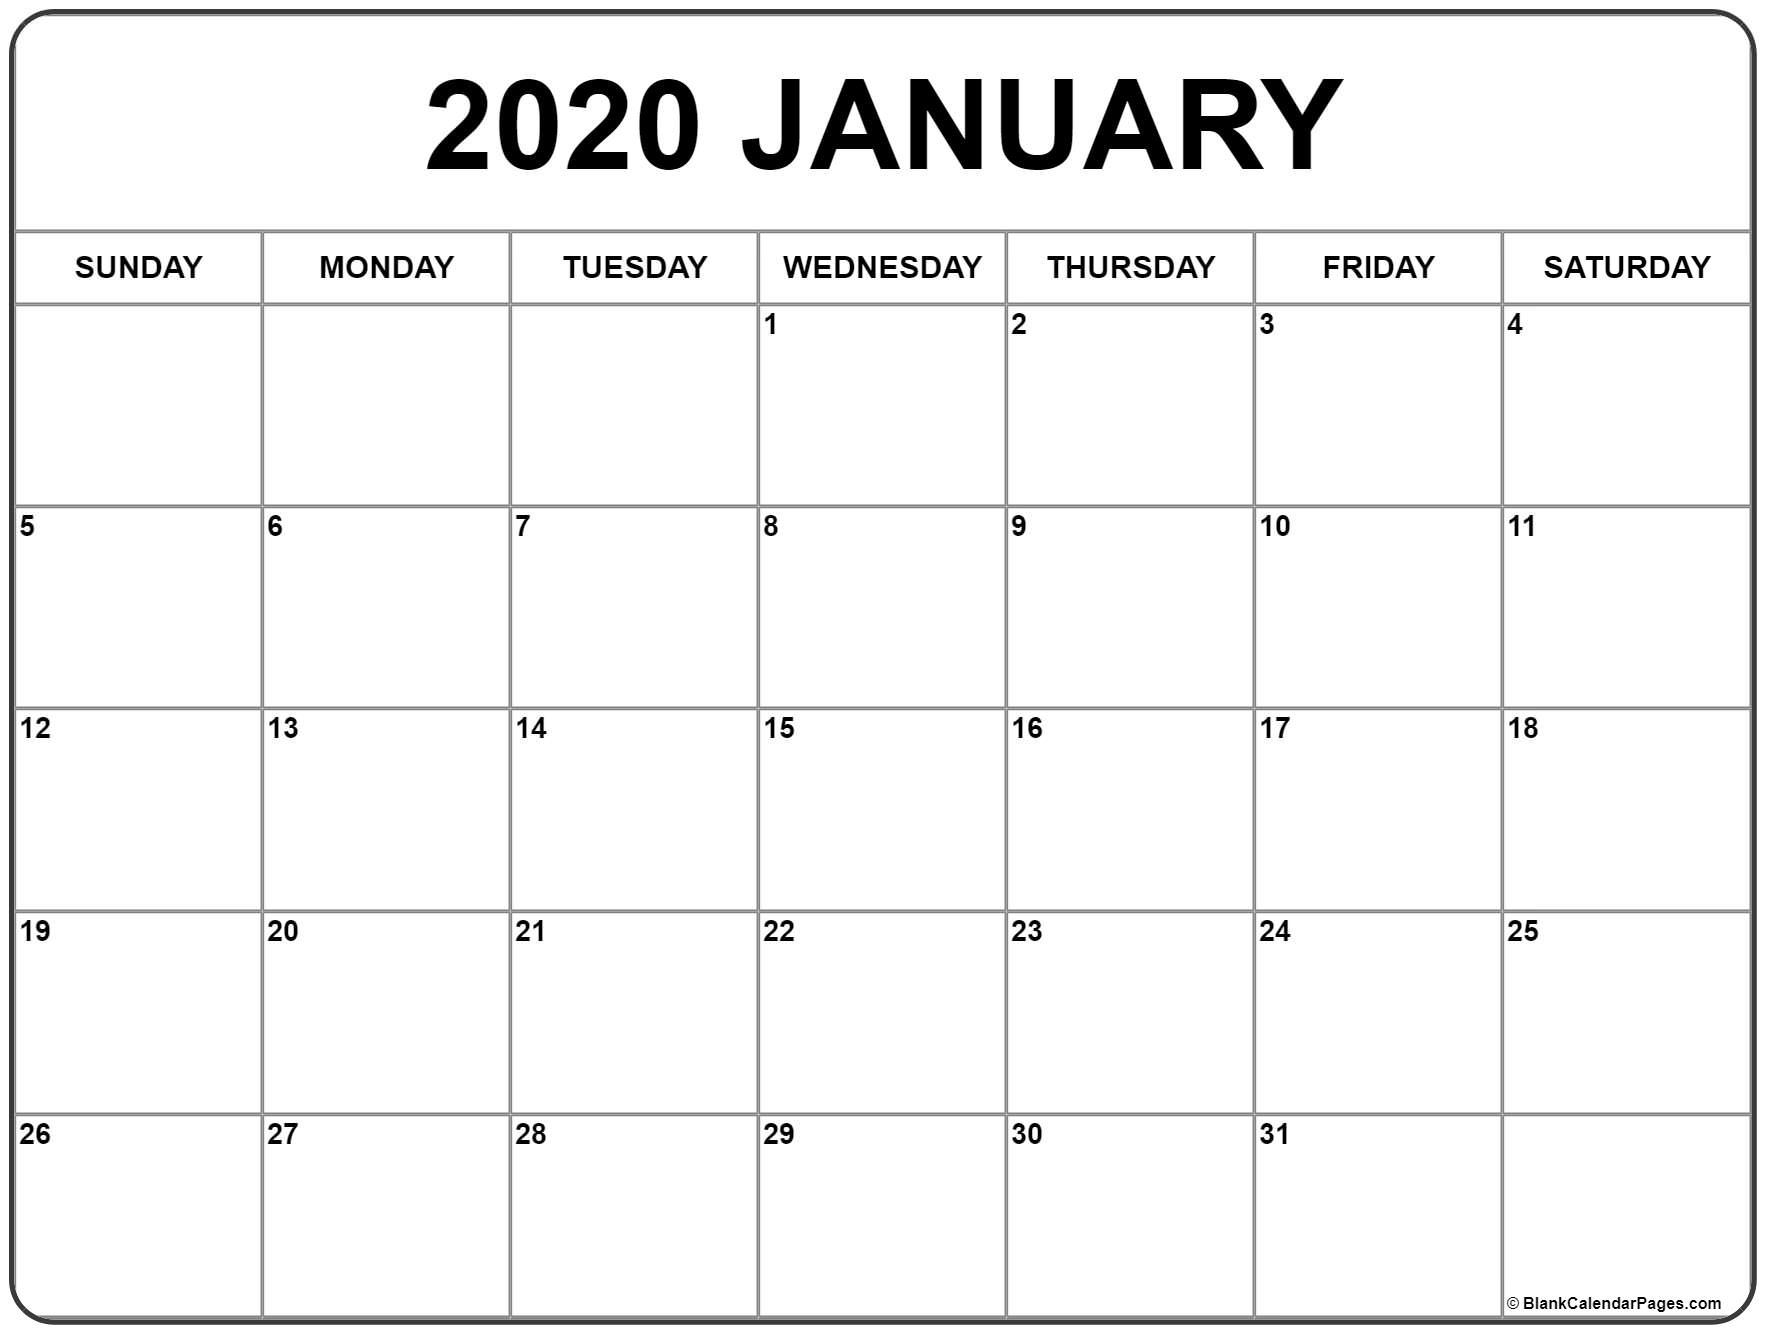 Get Large Block Monthly Calendar | Calendar Printables Free Blank with regard to Free Large Block Printable Calendars